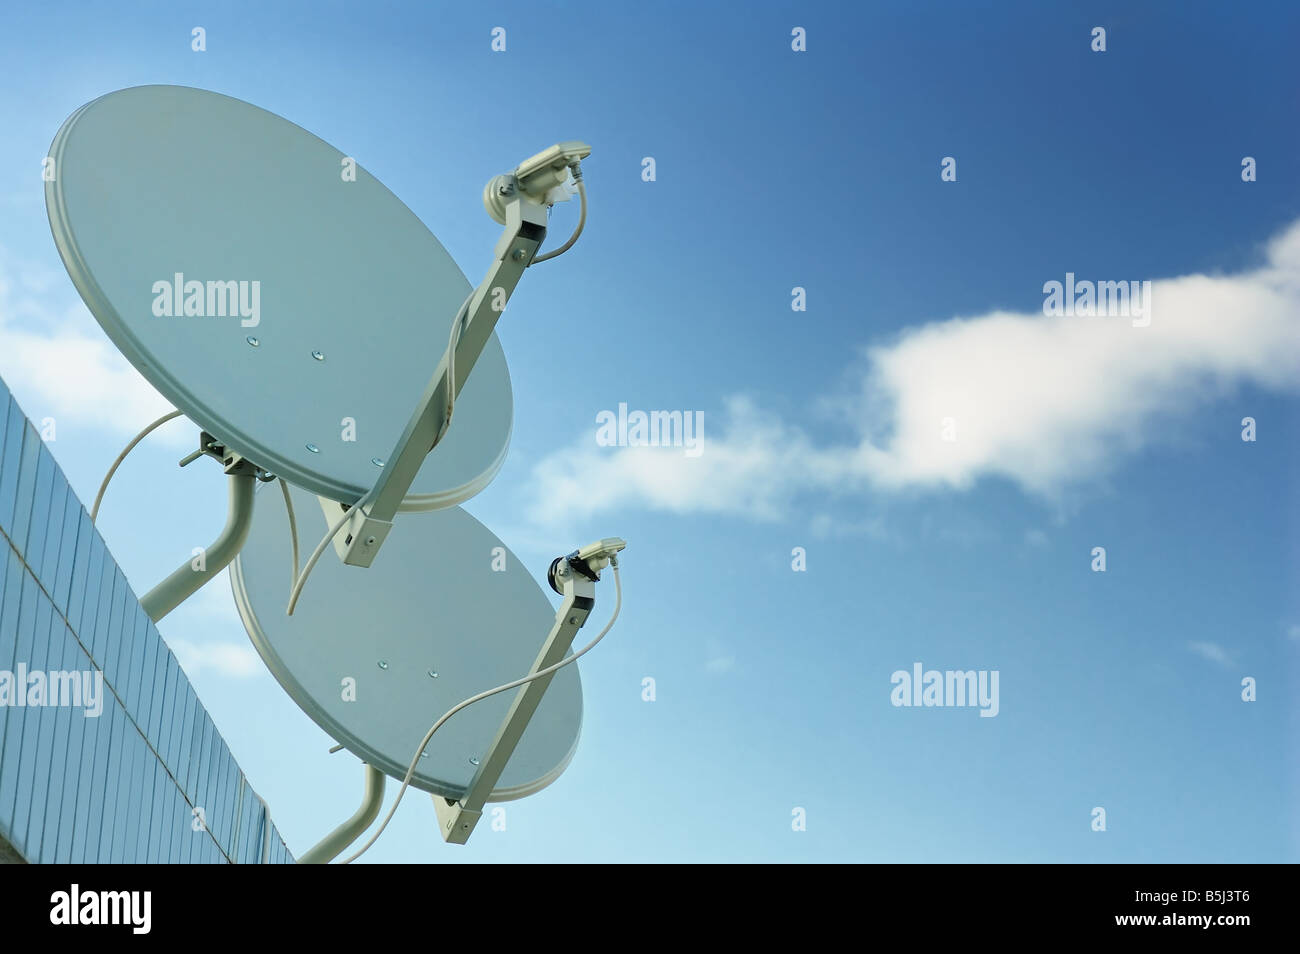 Communication antenna under blue sky Stock Photo